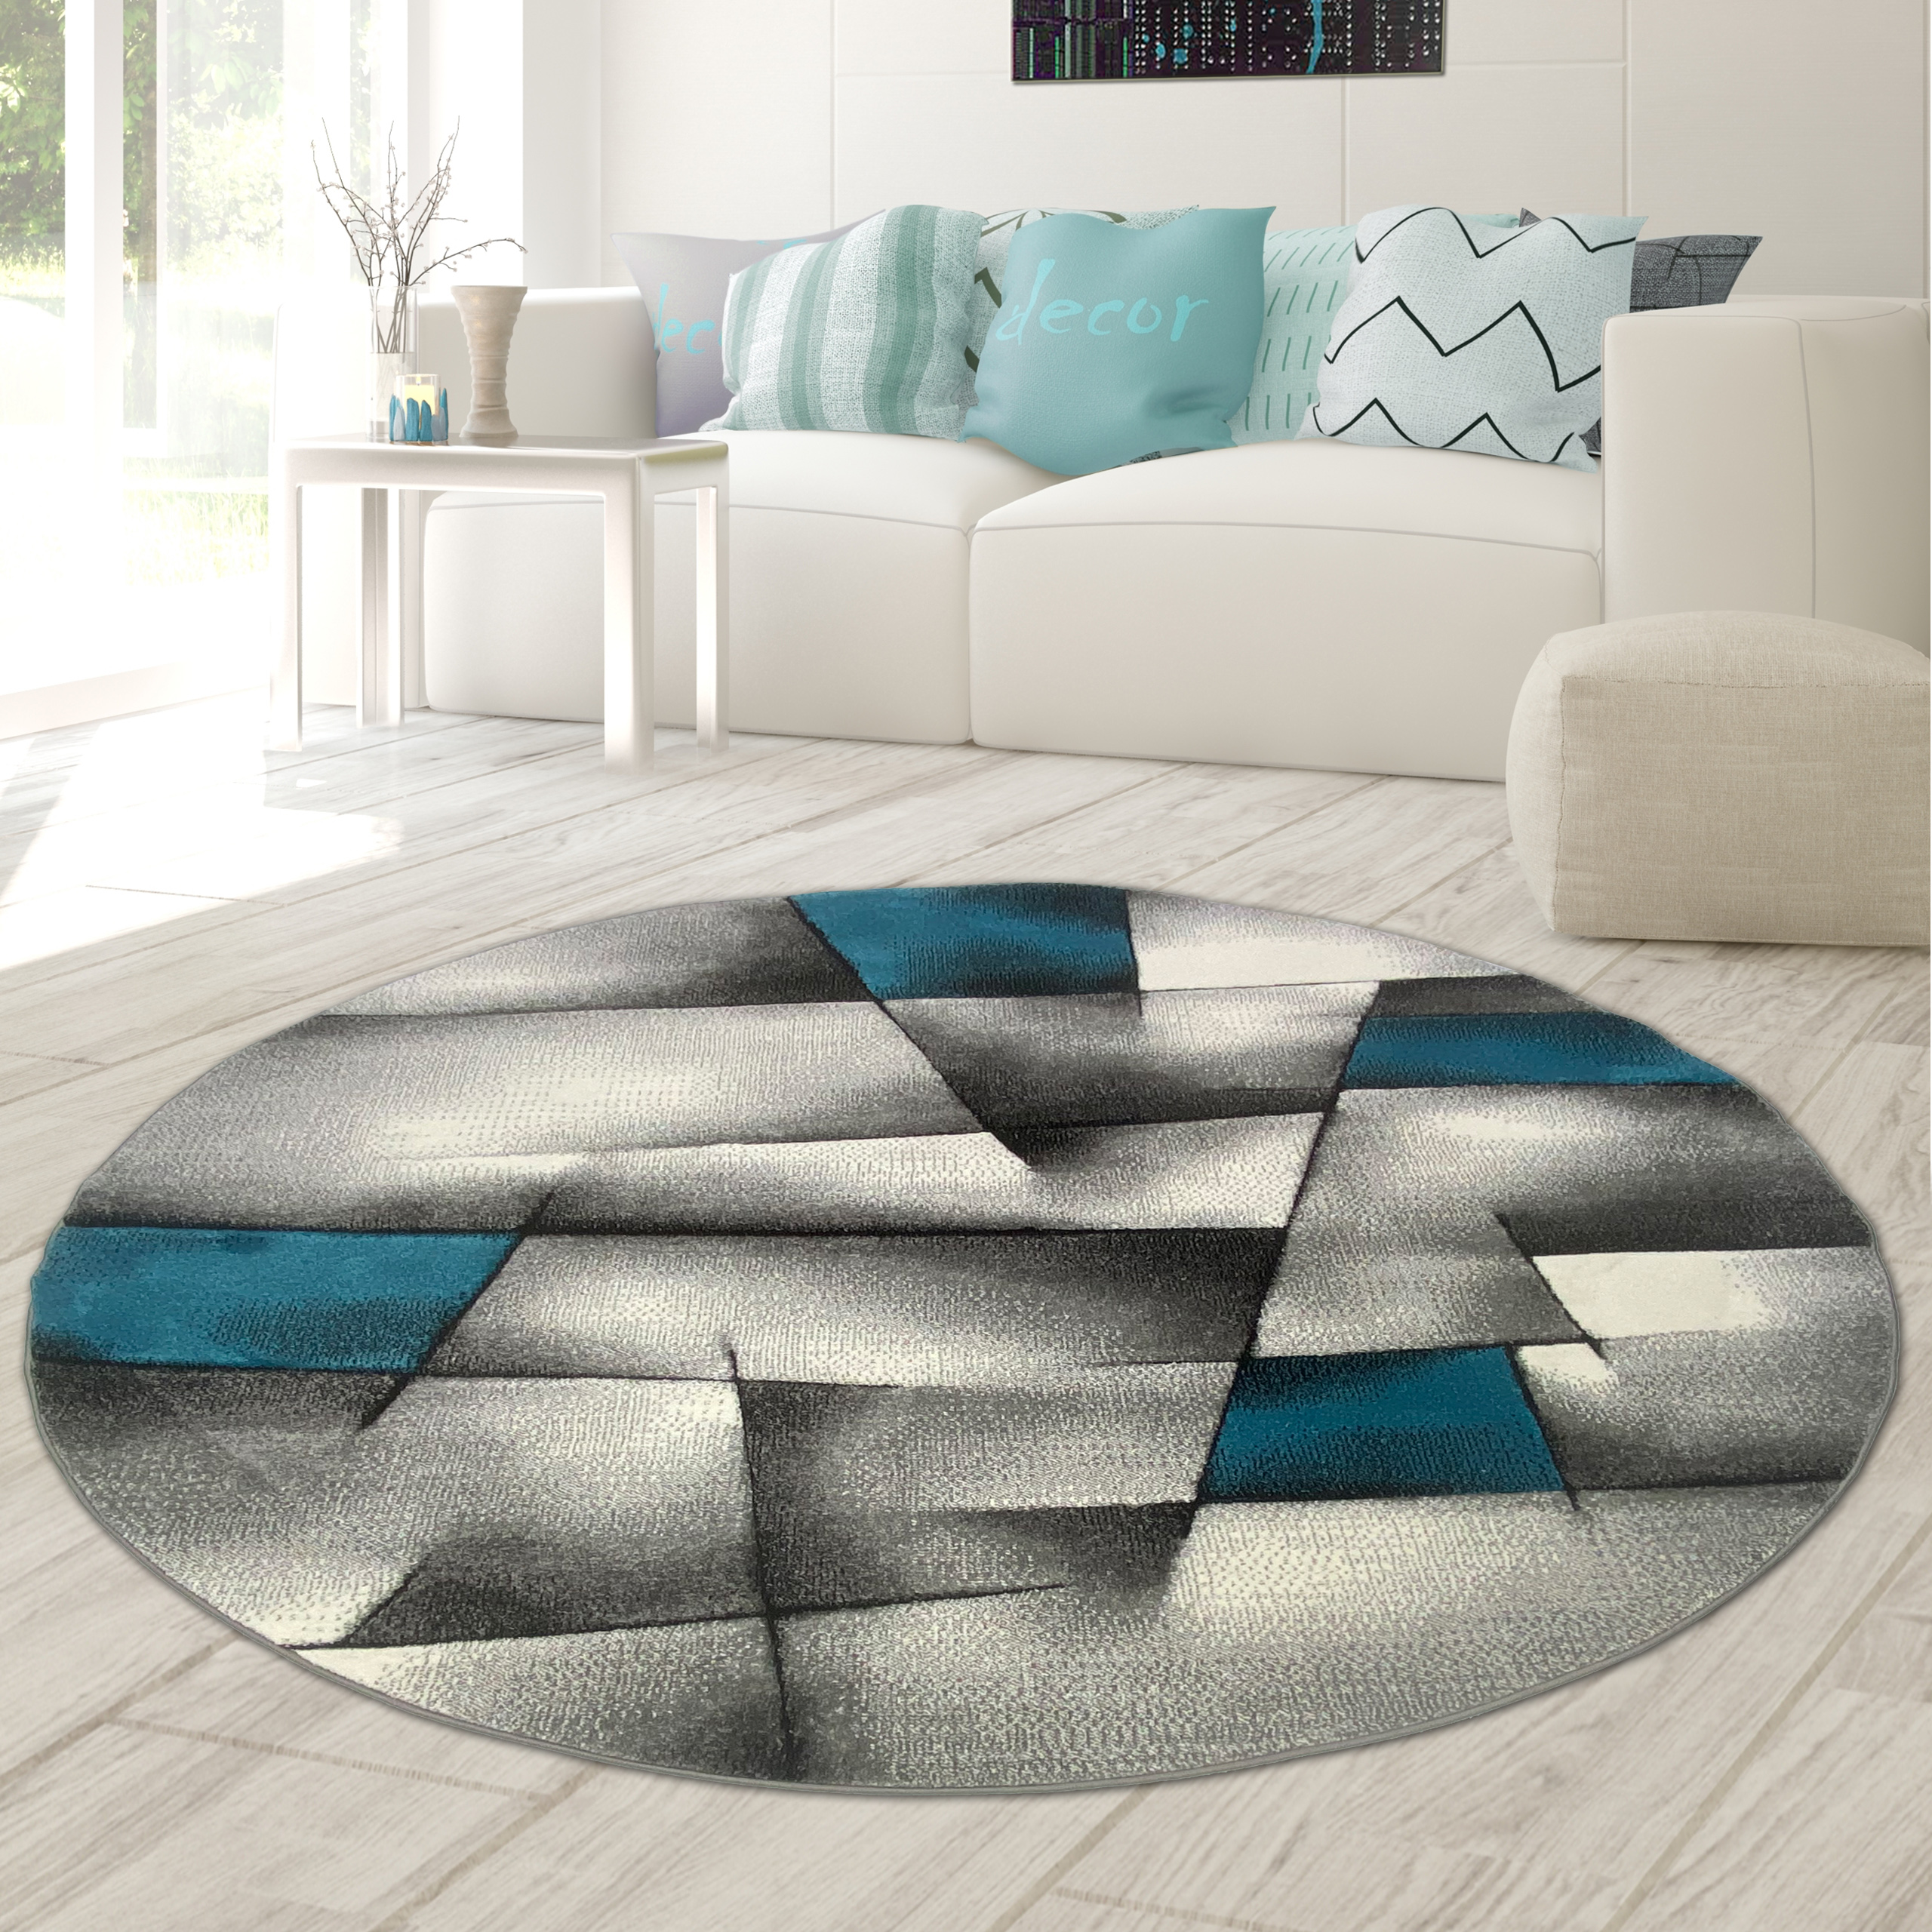 -Traum Teppich dreams & High-quality and Modern cheap - designer carpet at carpets: